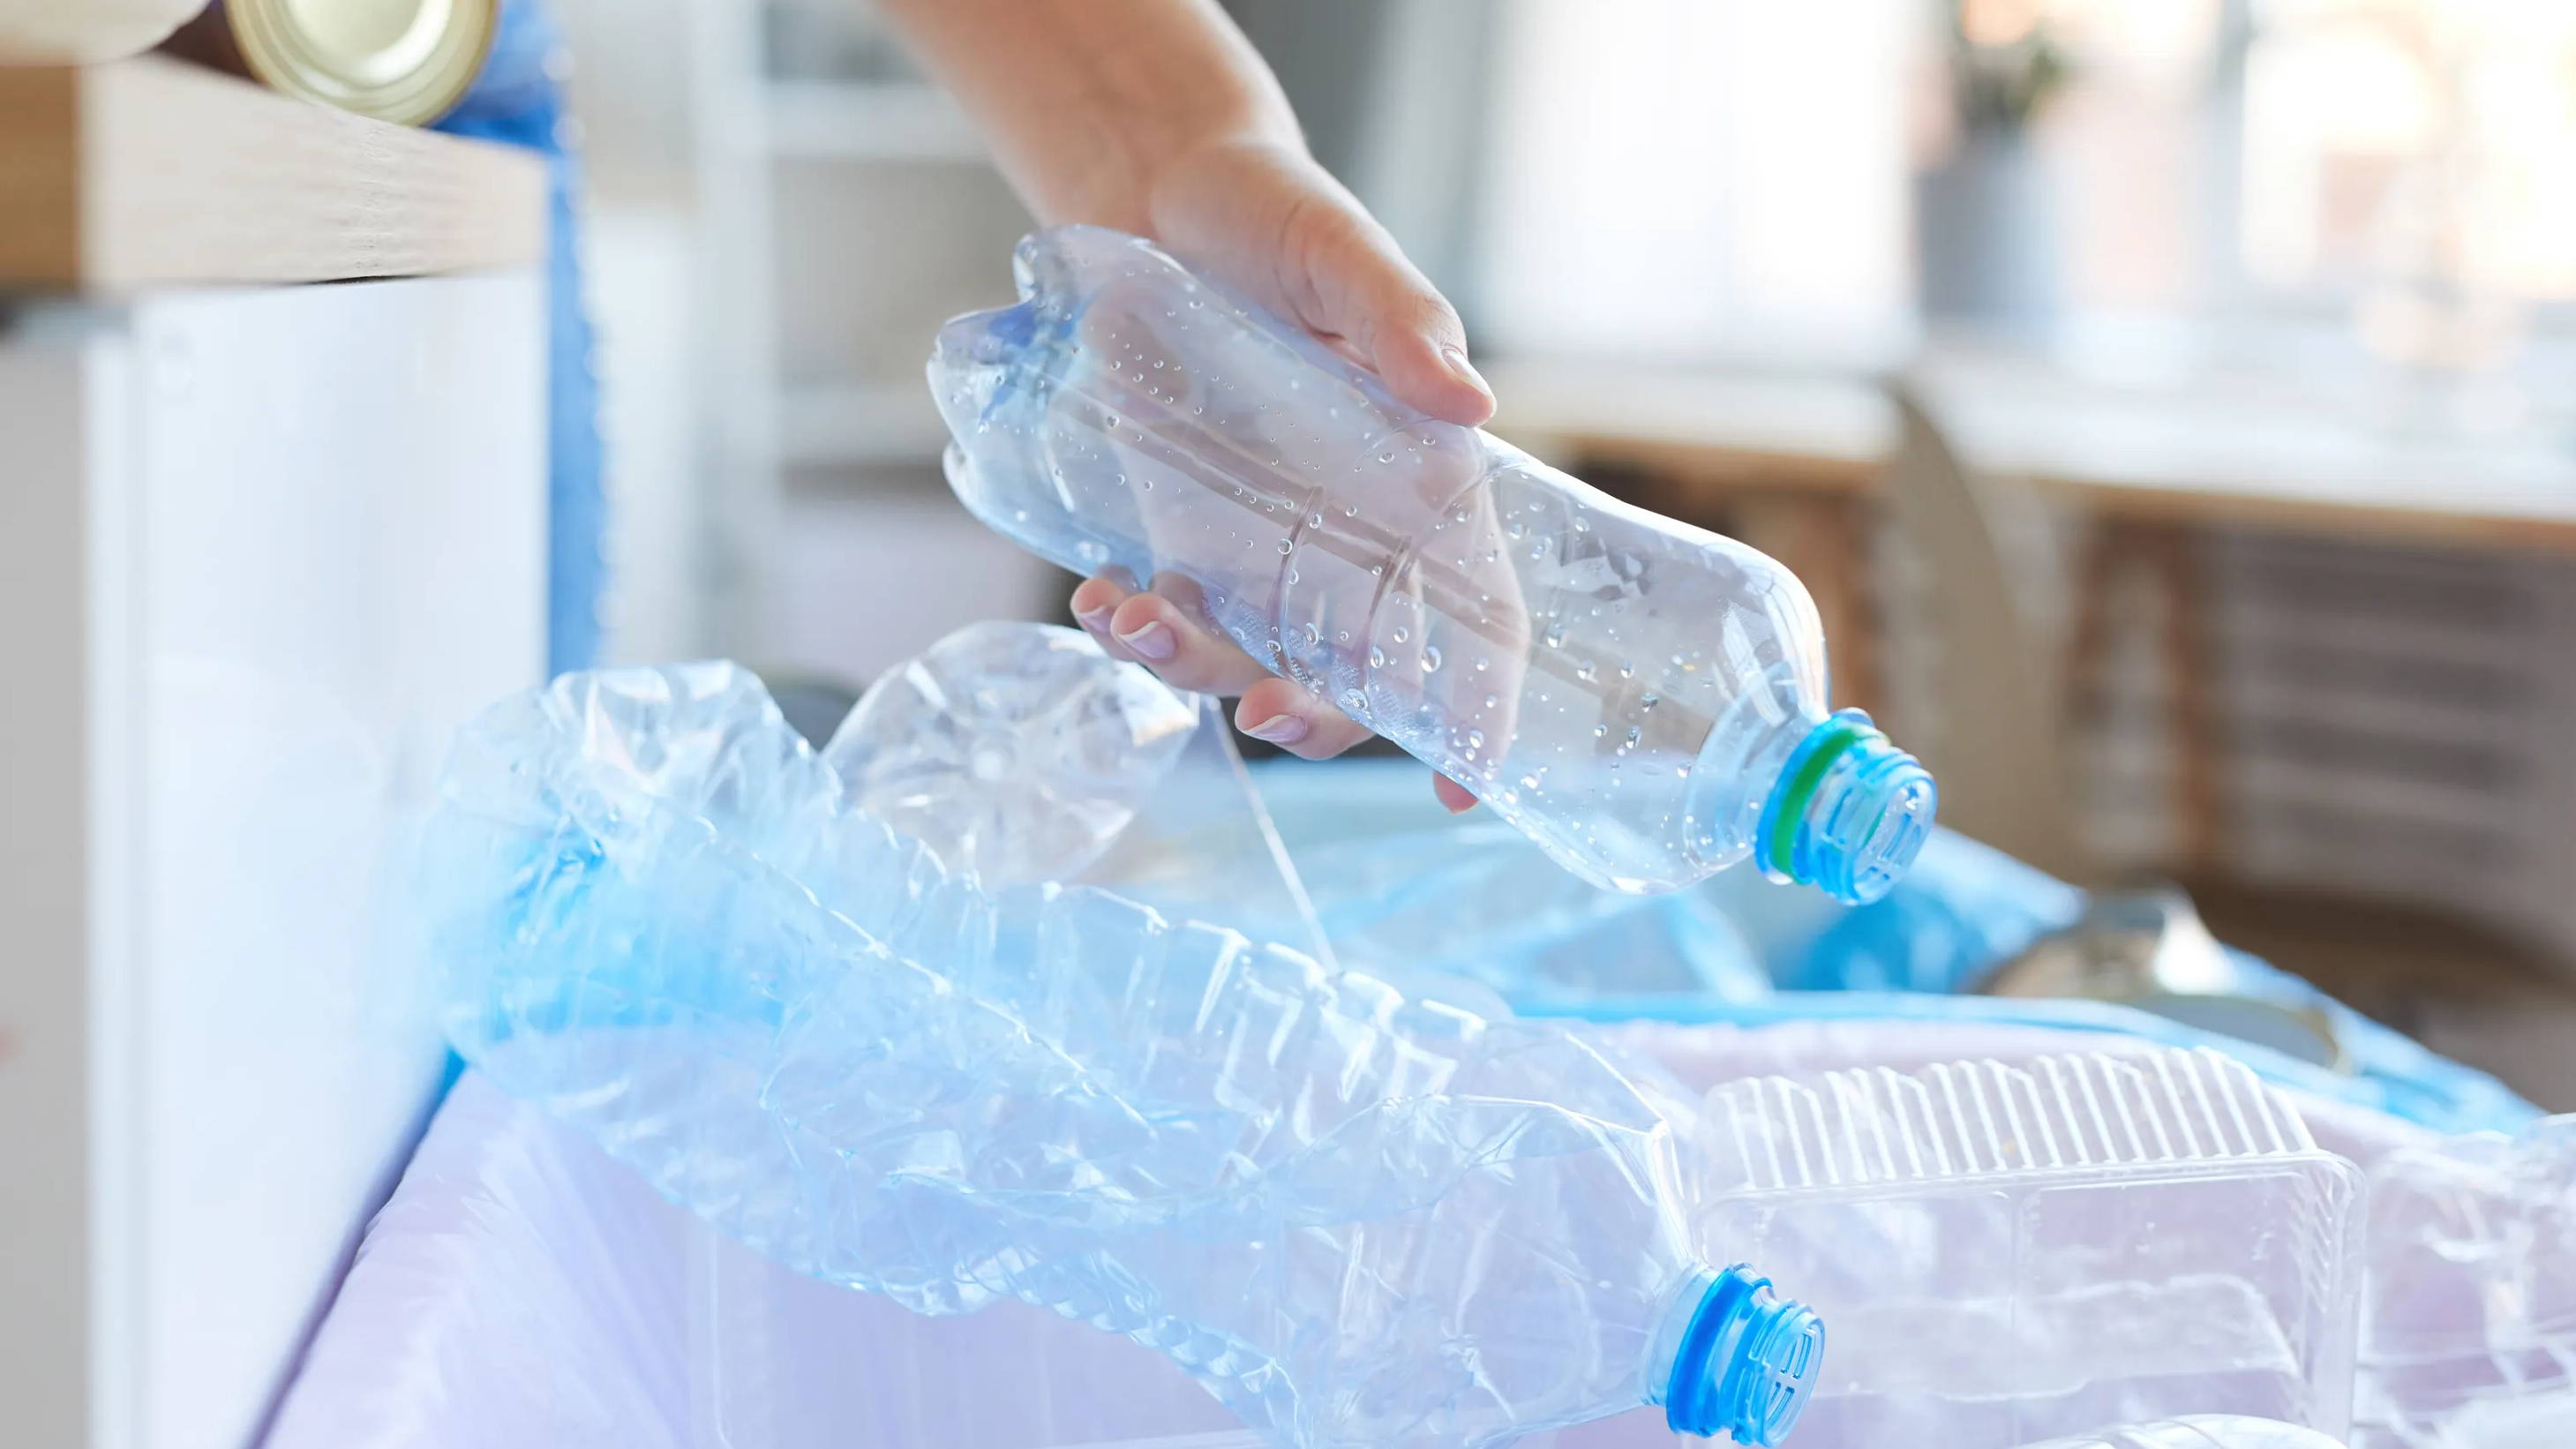 Plastic water bottle sorting